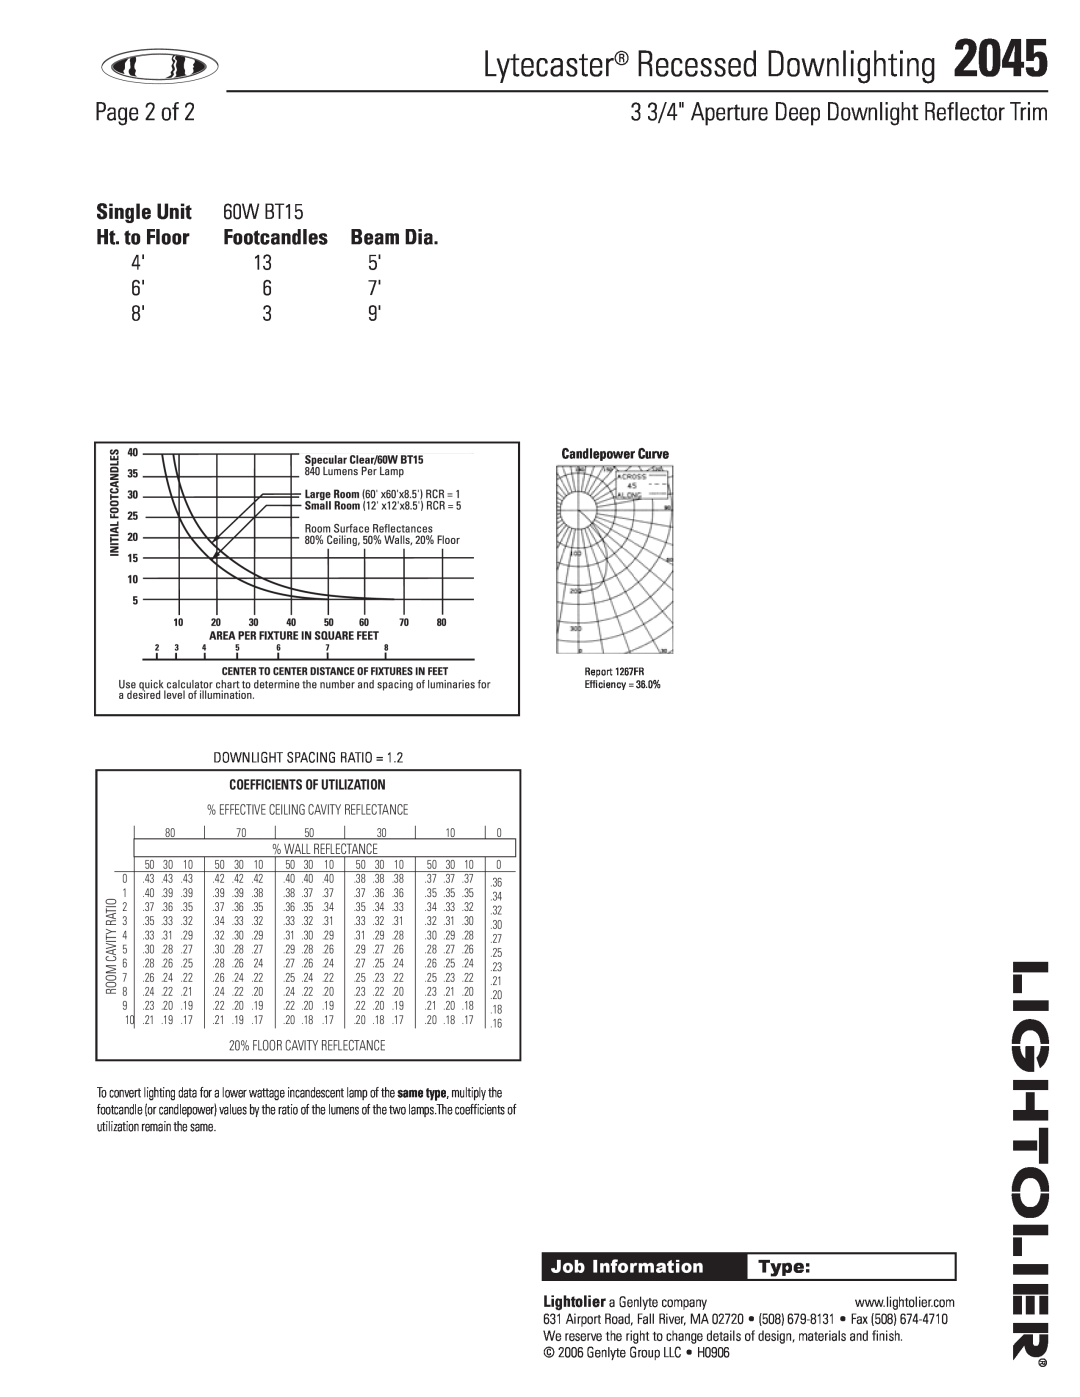 Lightolier 2045 Page 2 of, Lytecaster Recessed Downlighting, 3 3/4 Aperture Deep Downlight Reflector Trim, Single Unit 